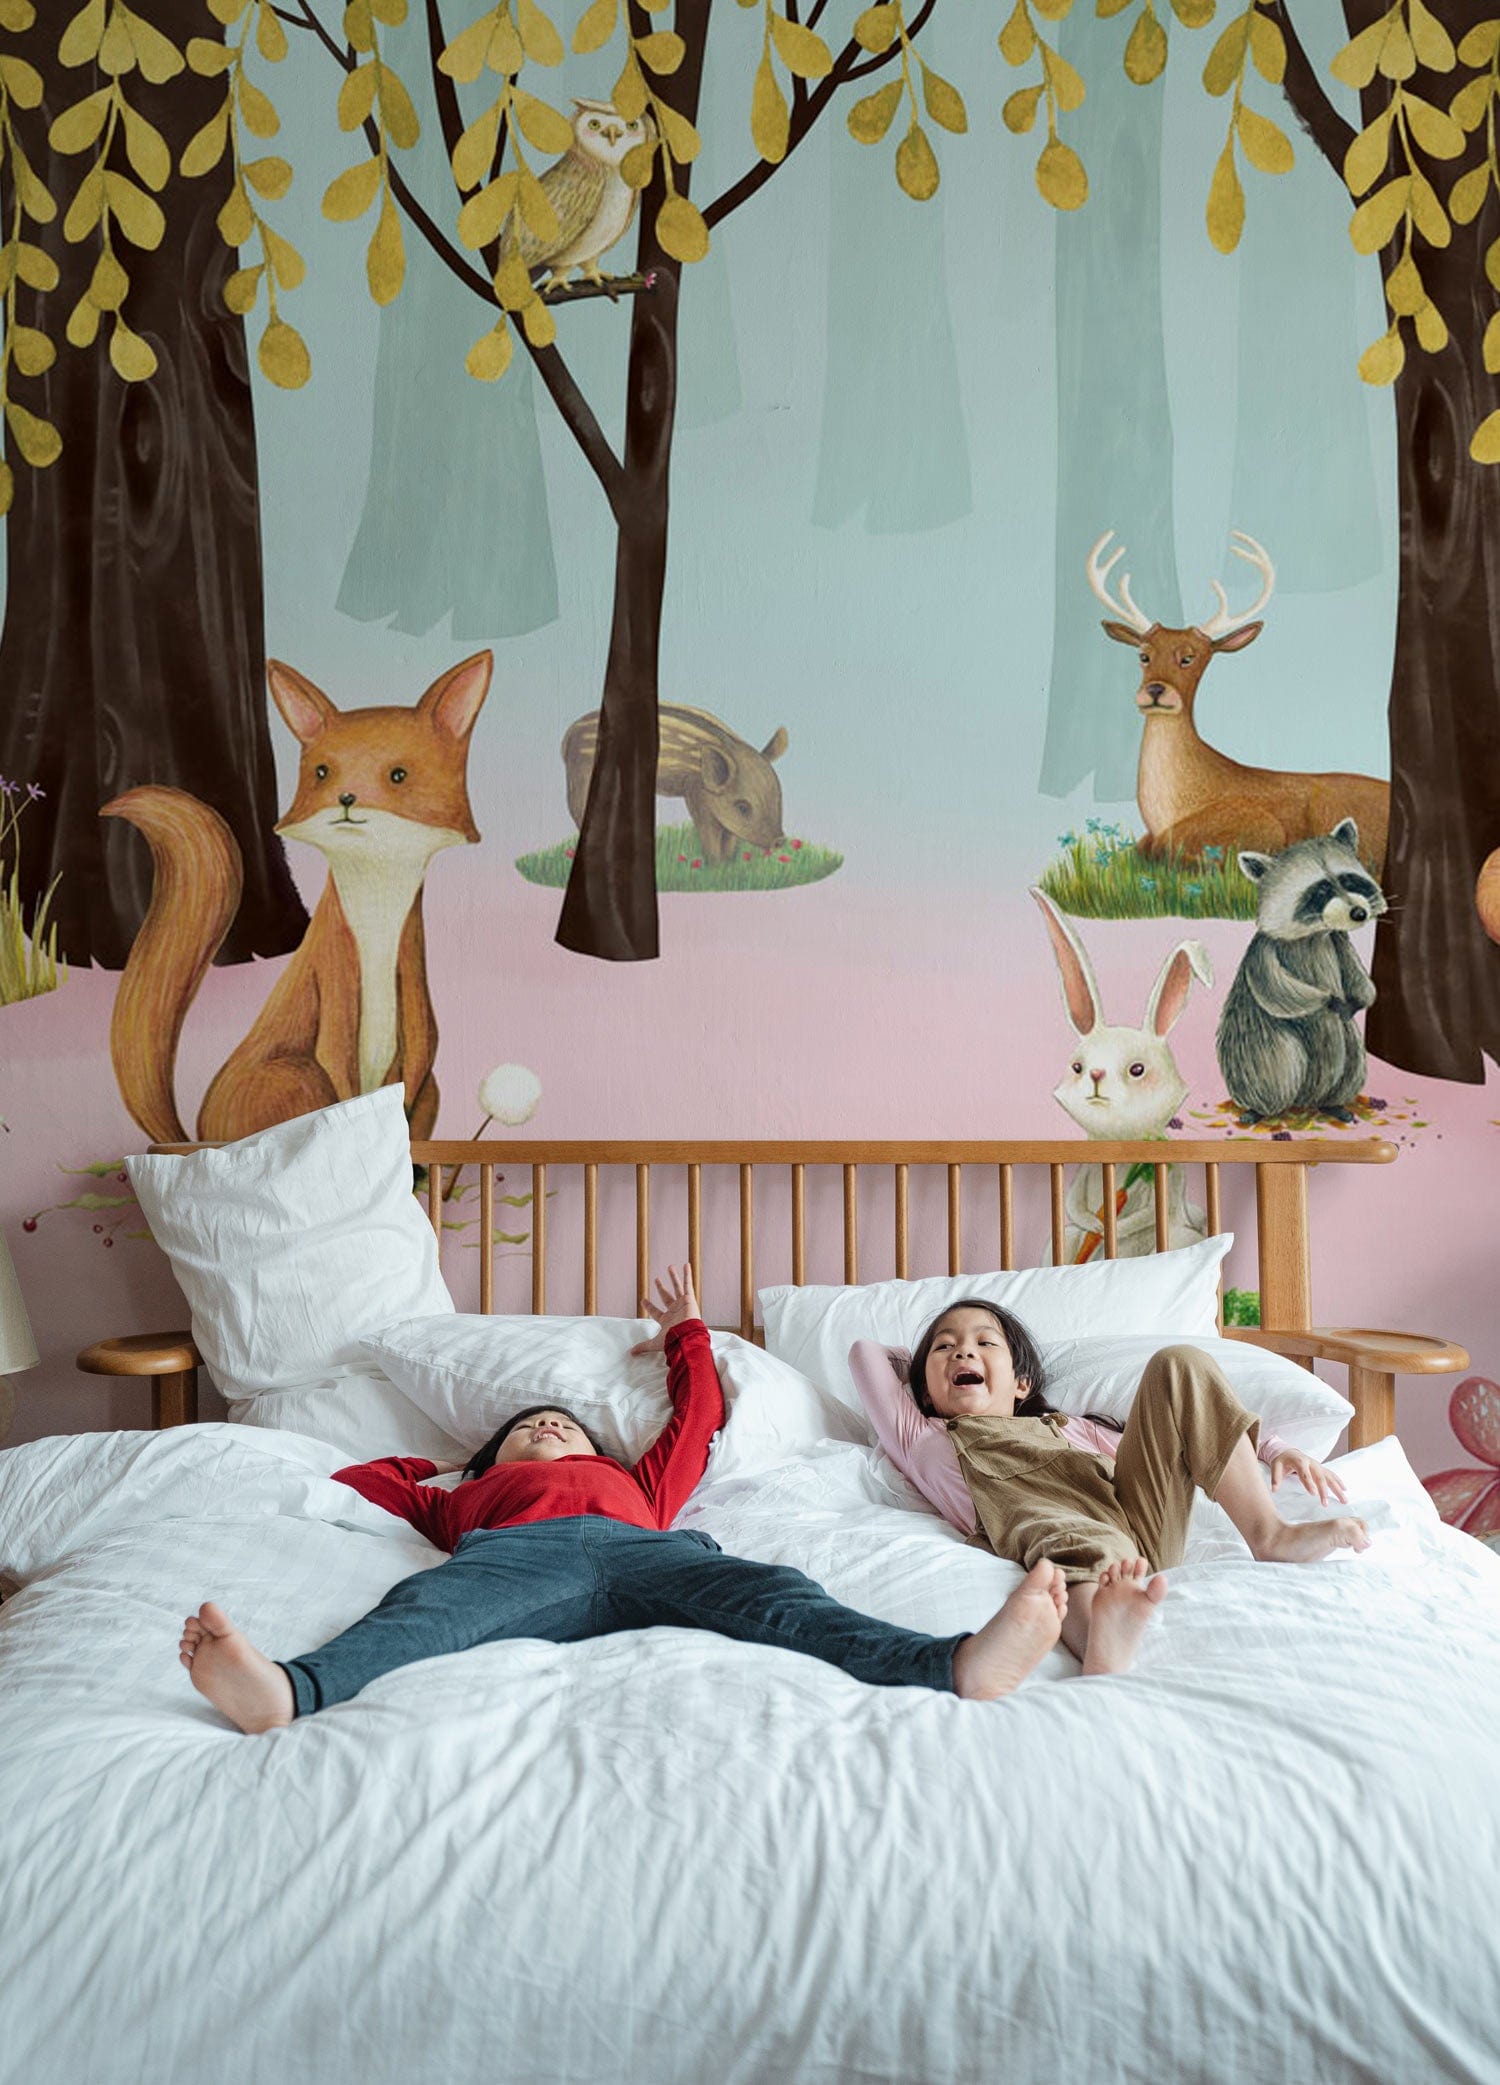 animal houses cartoon wallpaper bedroom mural